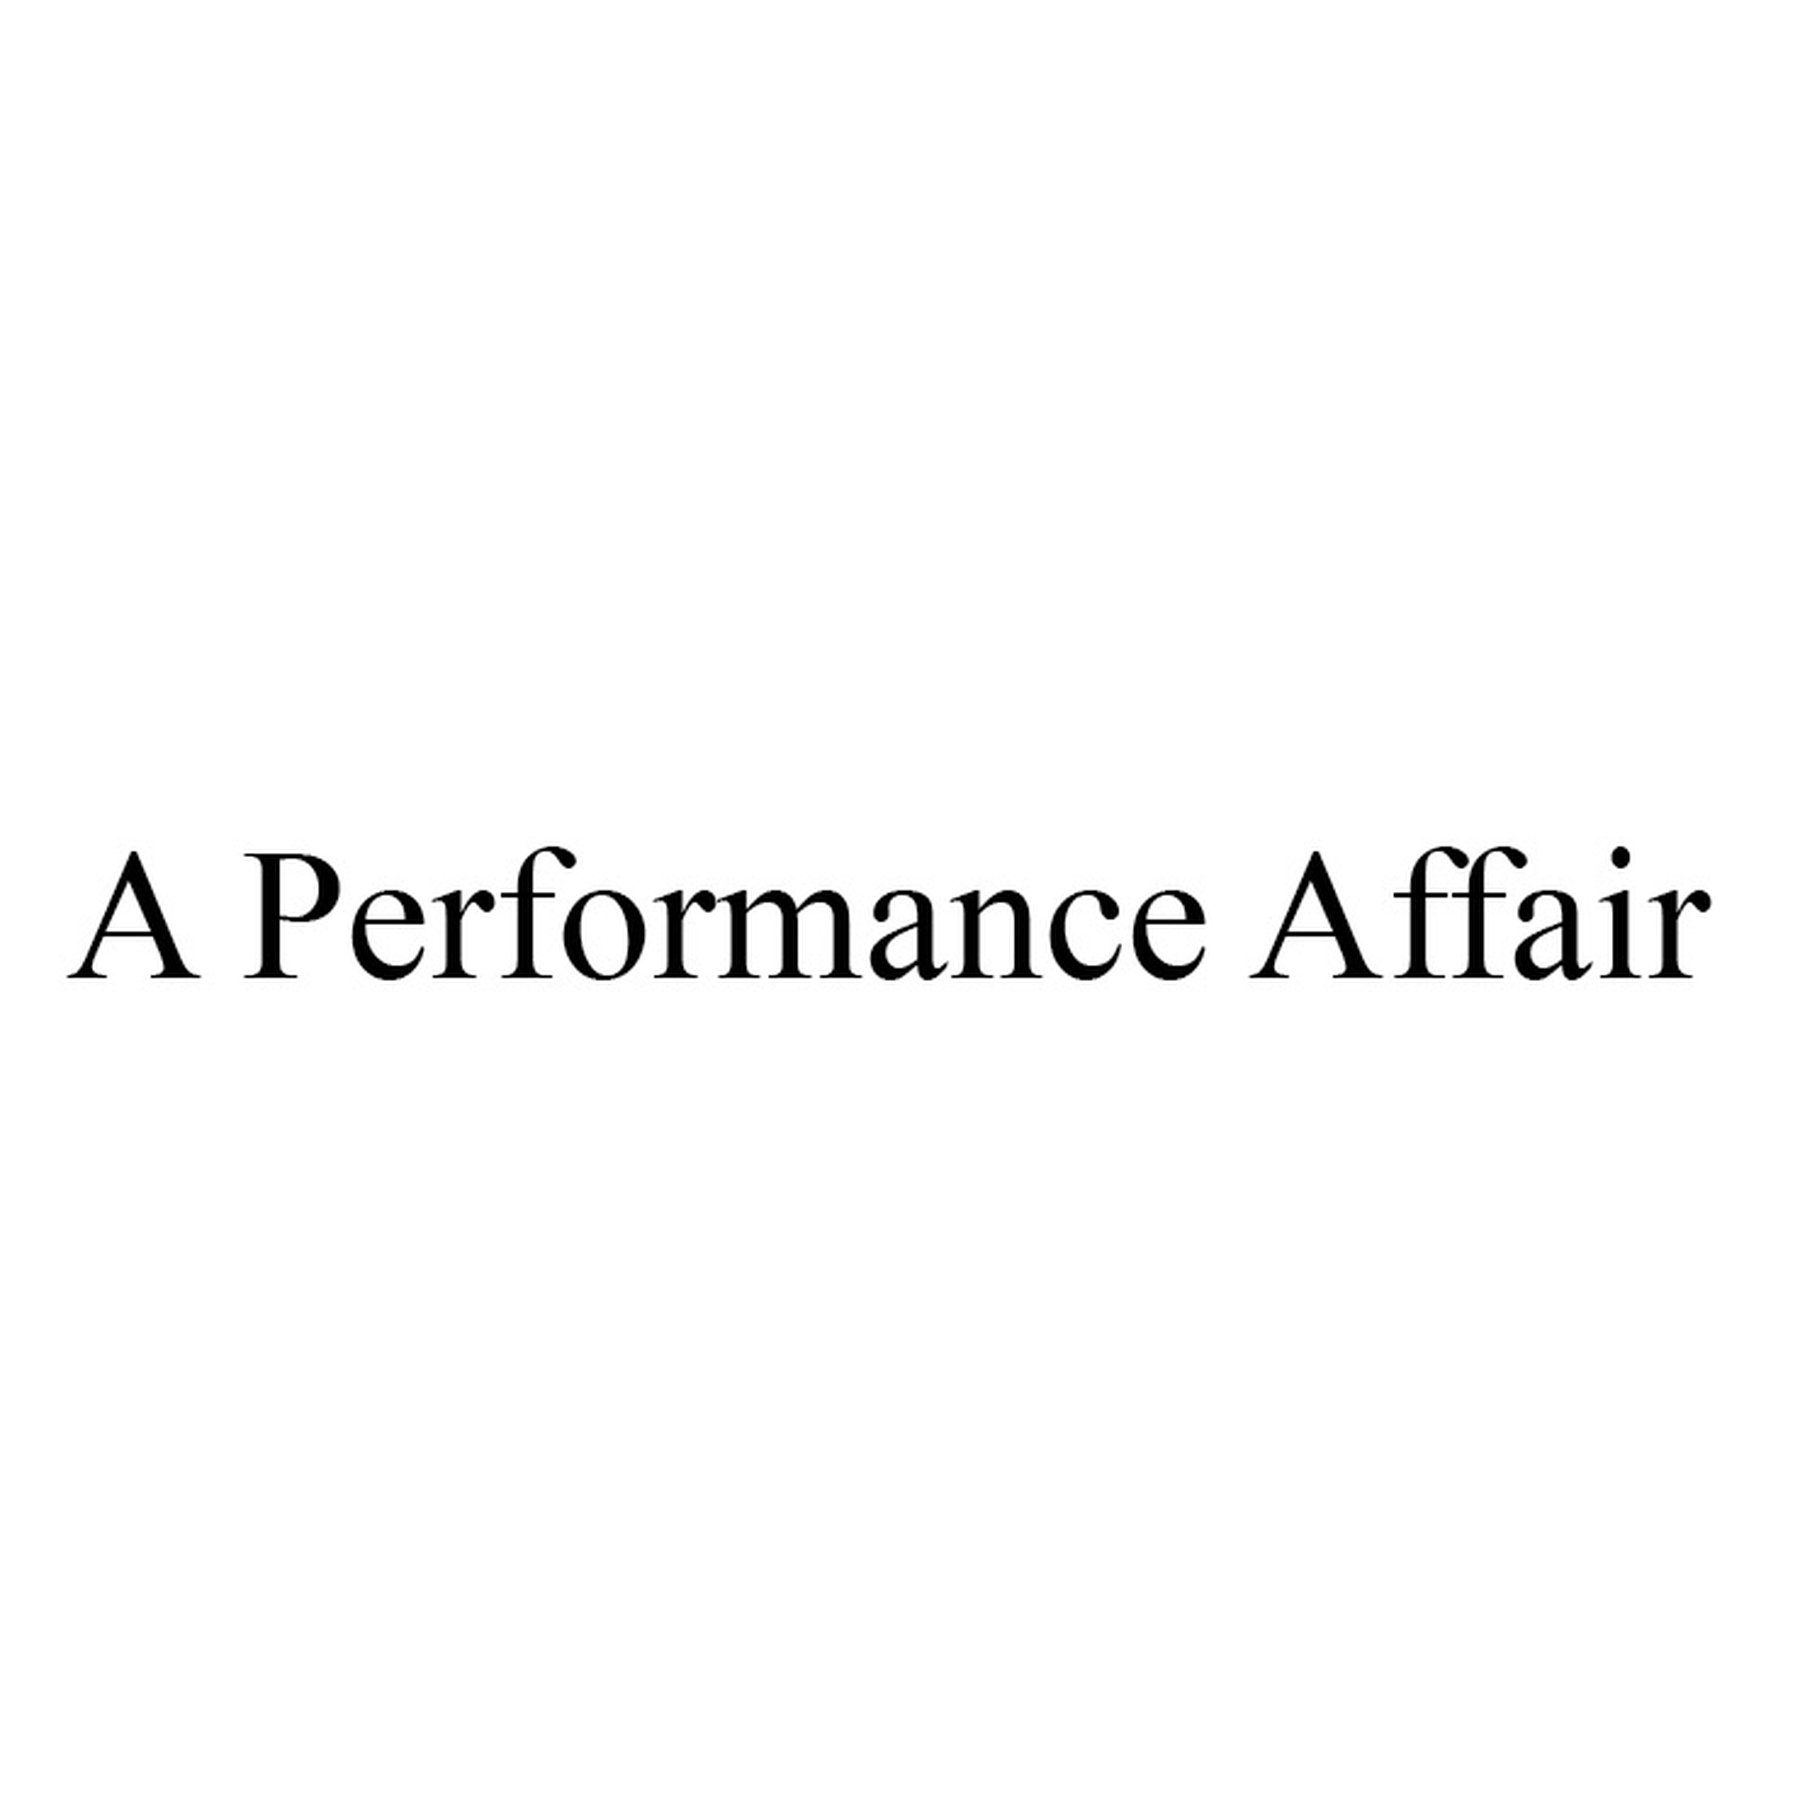 A Performance Affair - re:production